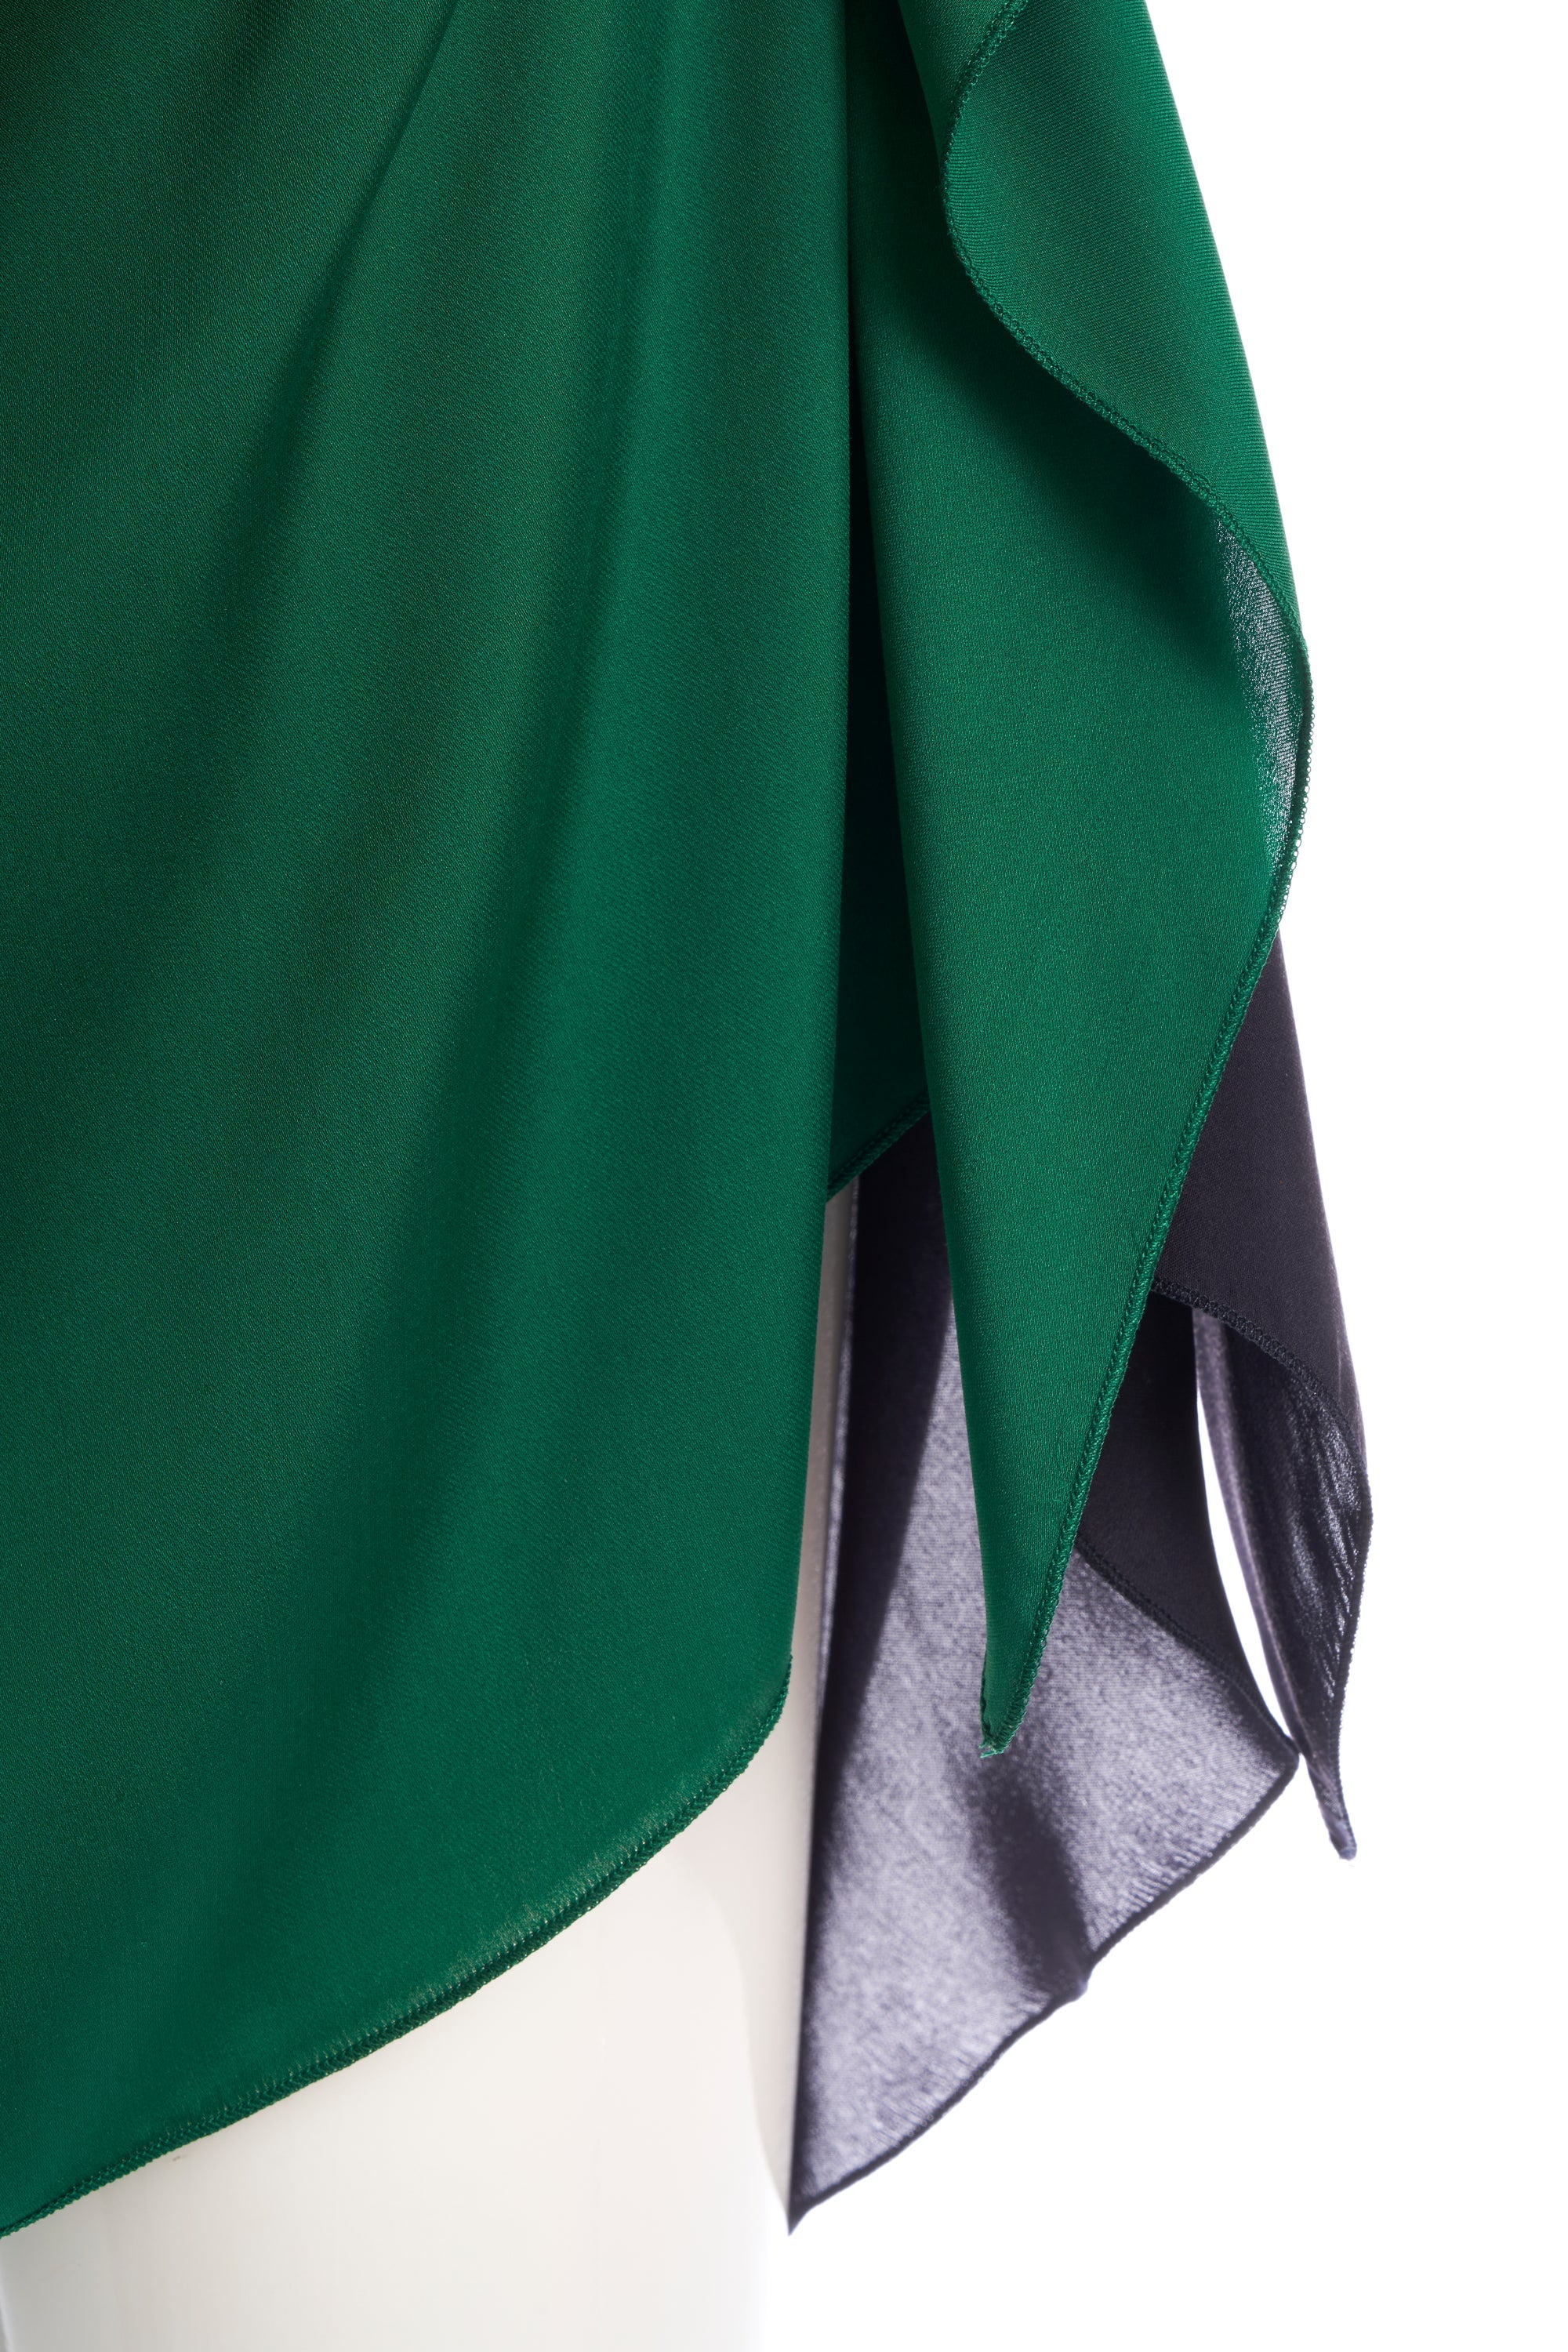 Lanvin Alber Elbaz 2013 Size 36 Green Black Silk Ruffle Dress